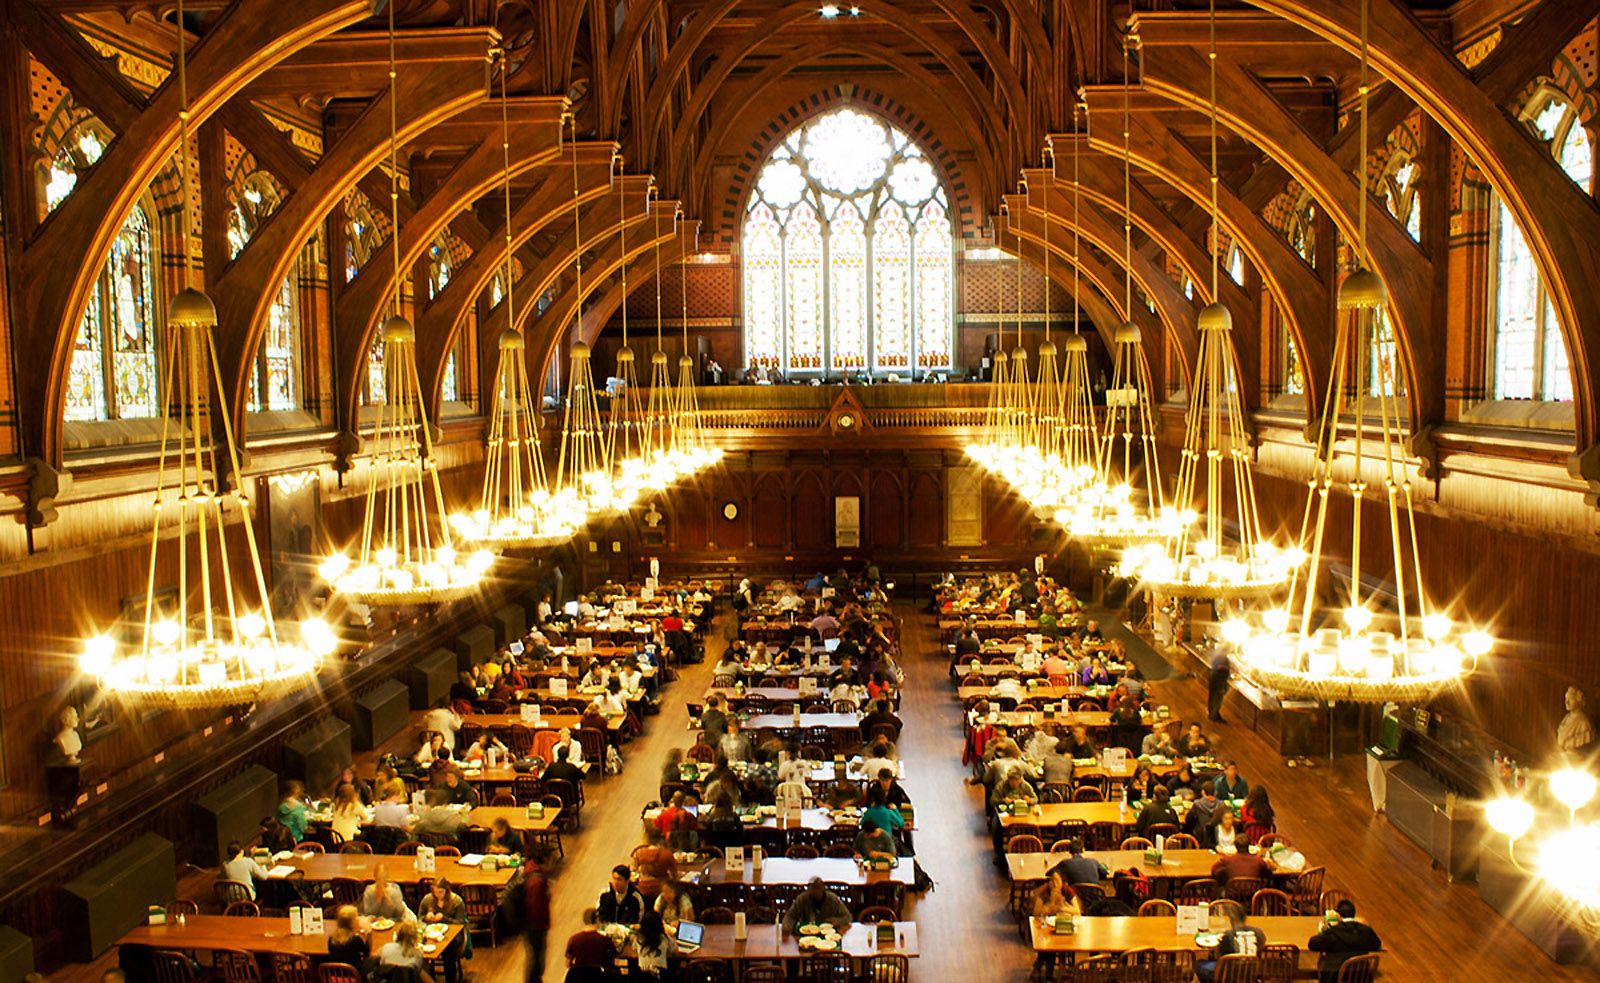 Massachusetts’ Harvard University Library